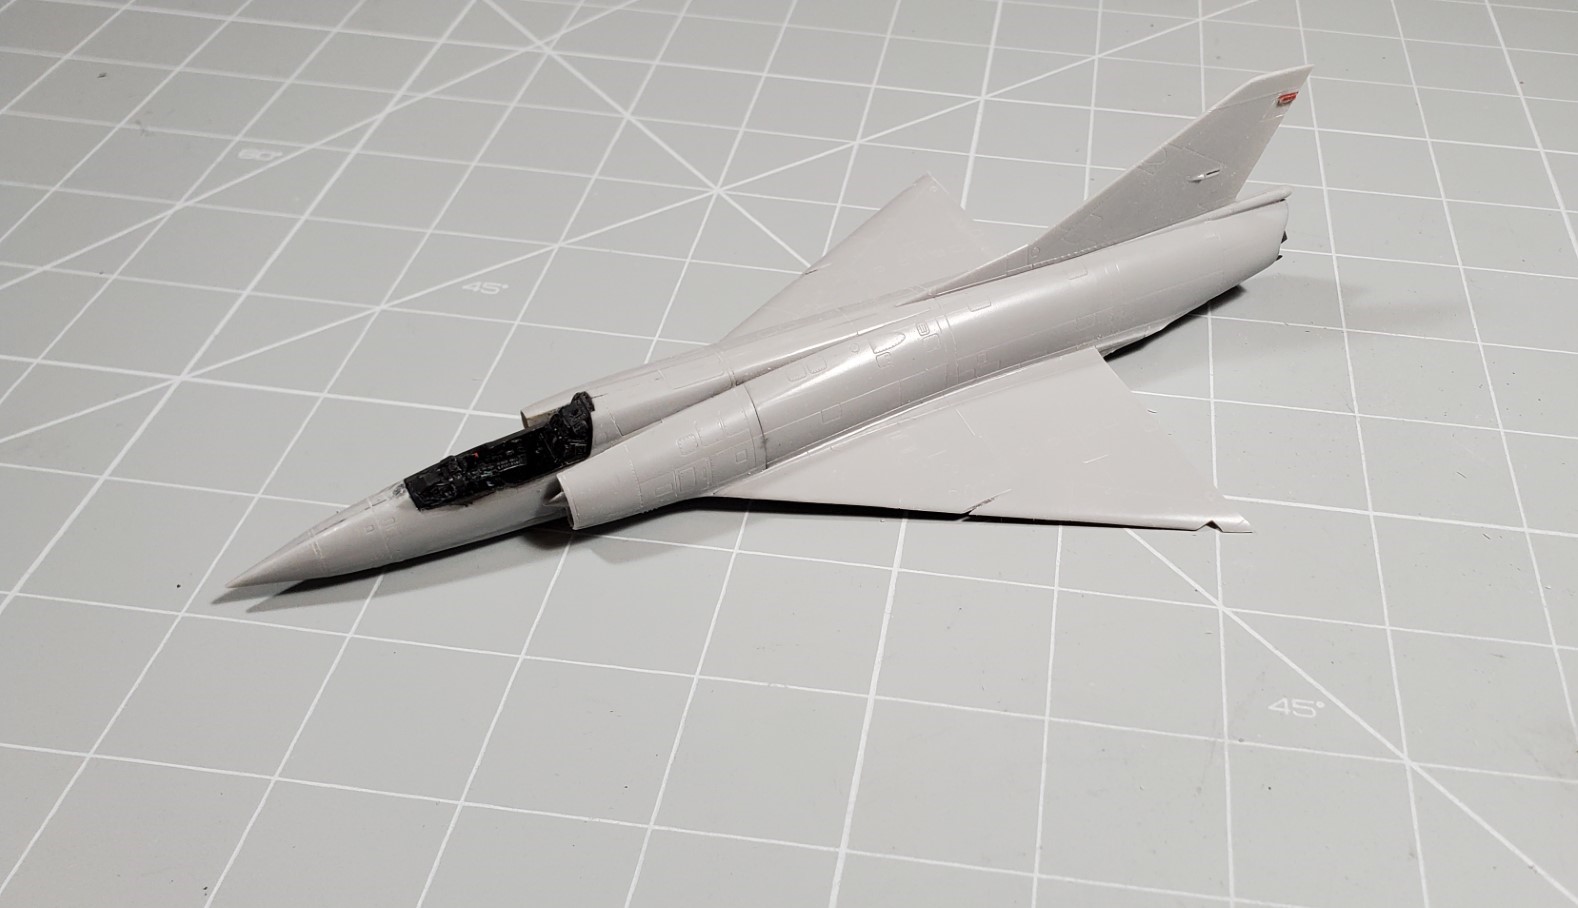 [Modelsvit] 1/72 - Dassault Mirage IIIC - Page 3 Thumb908